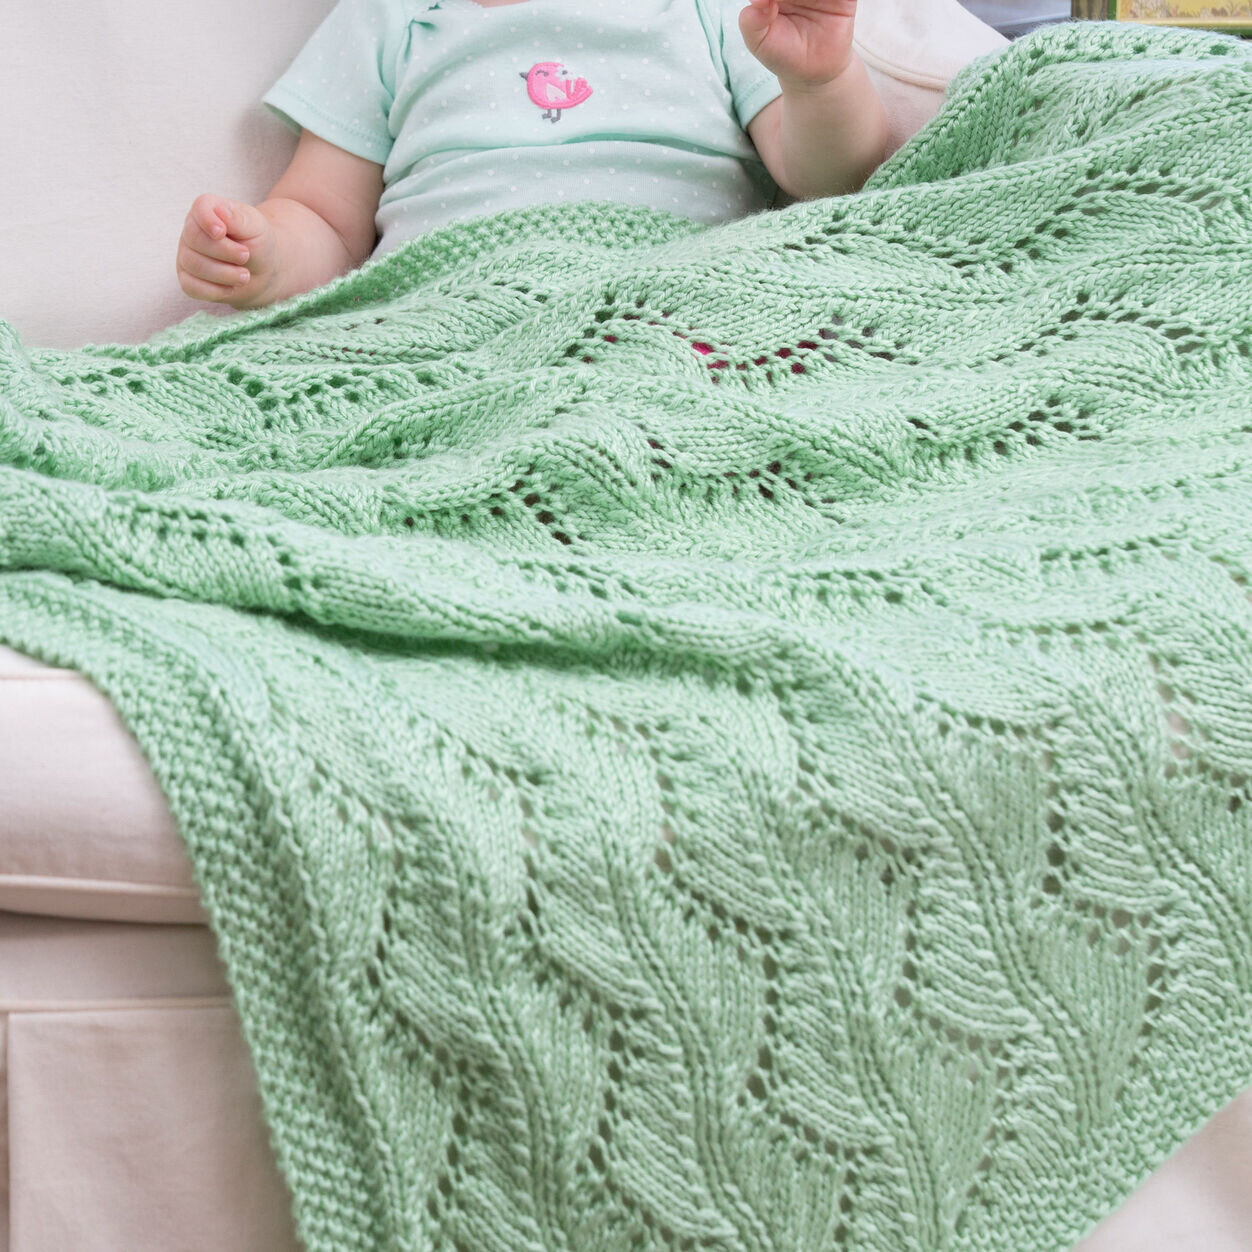 9-lace-baby-blanket-free-knitting-patterns-blog-nobleknits